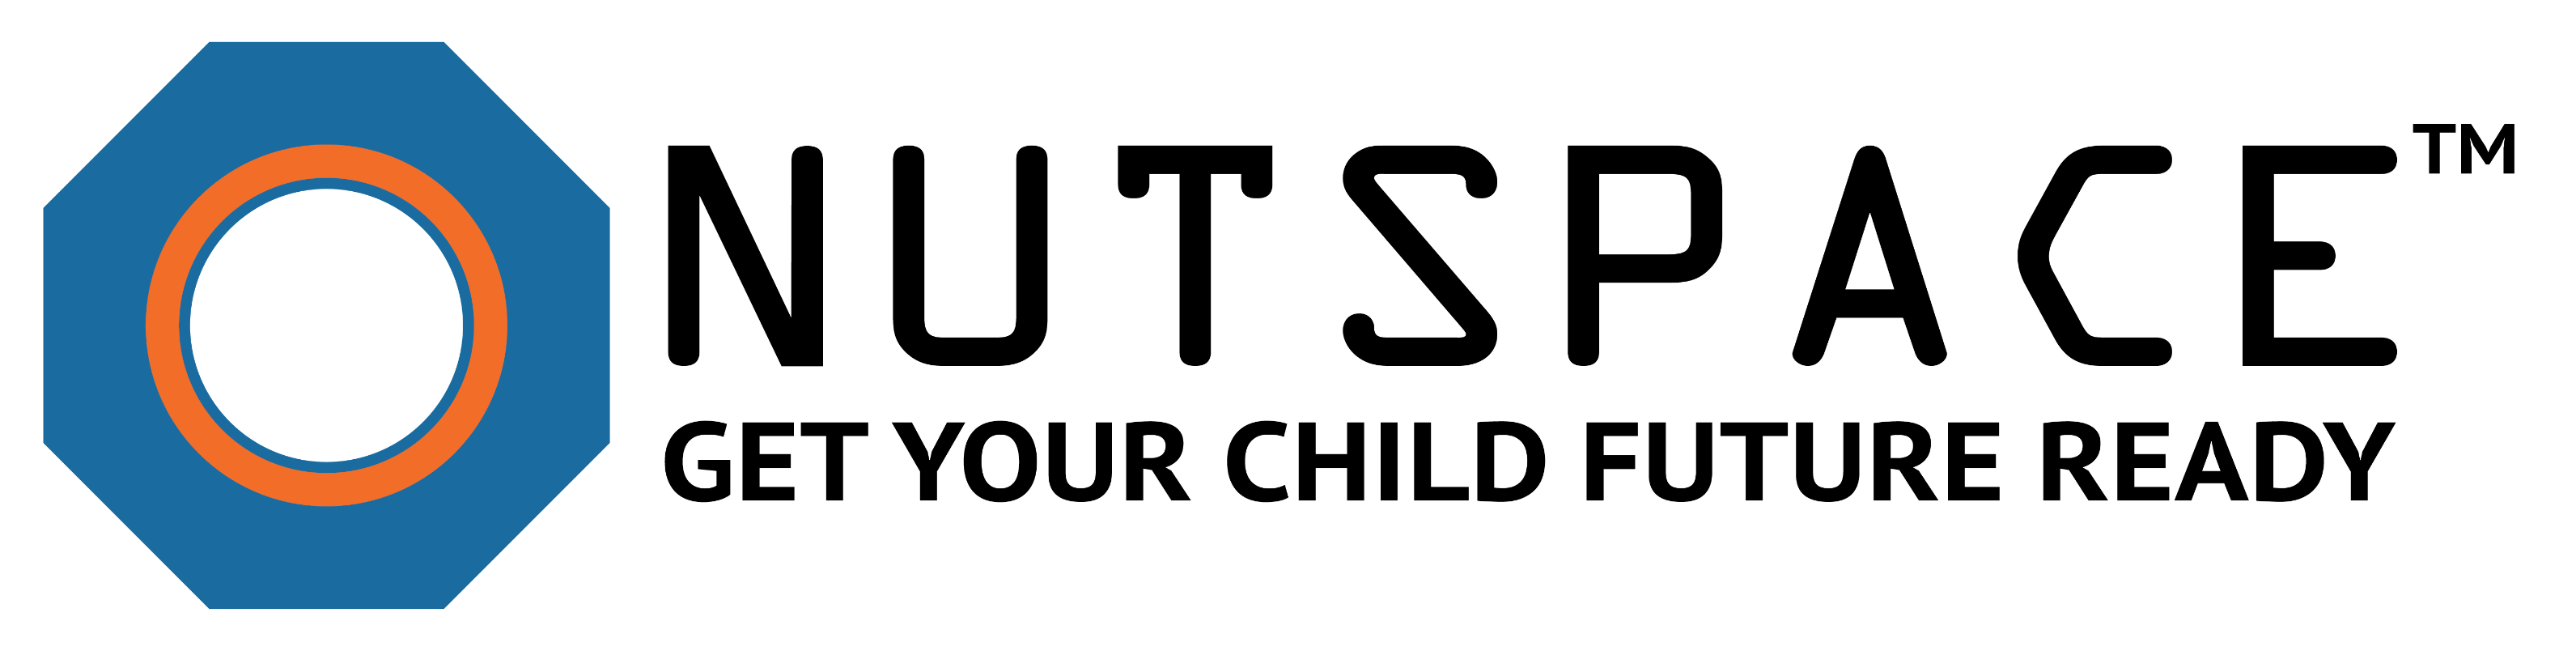 Nutspace logo